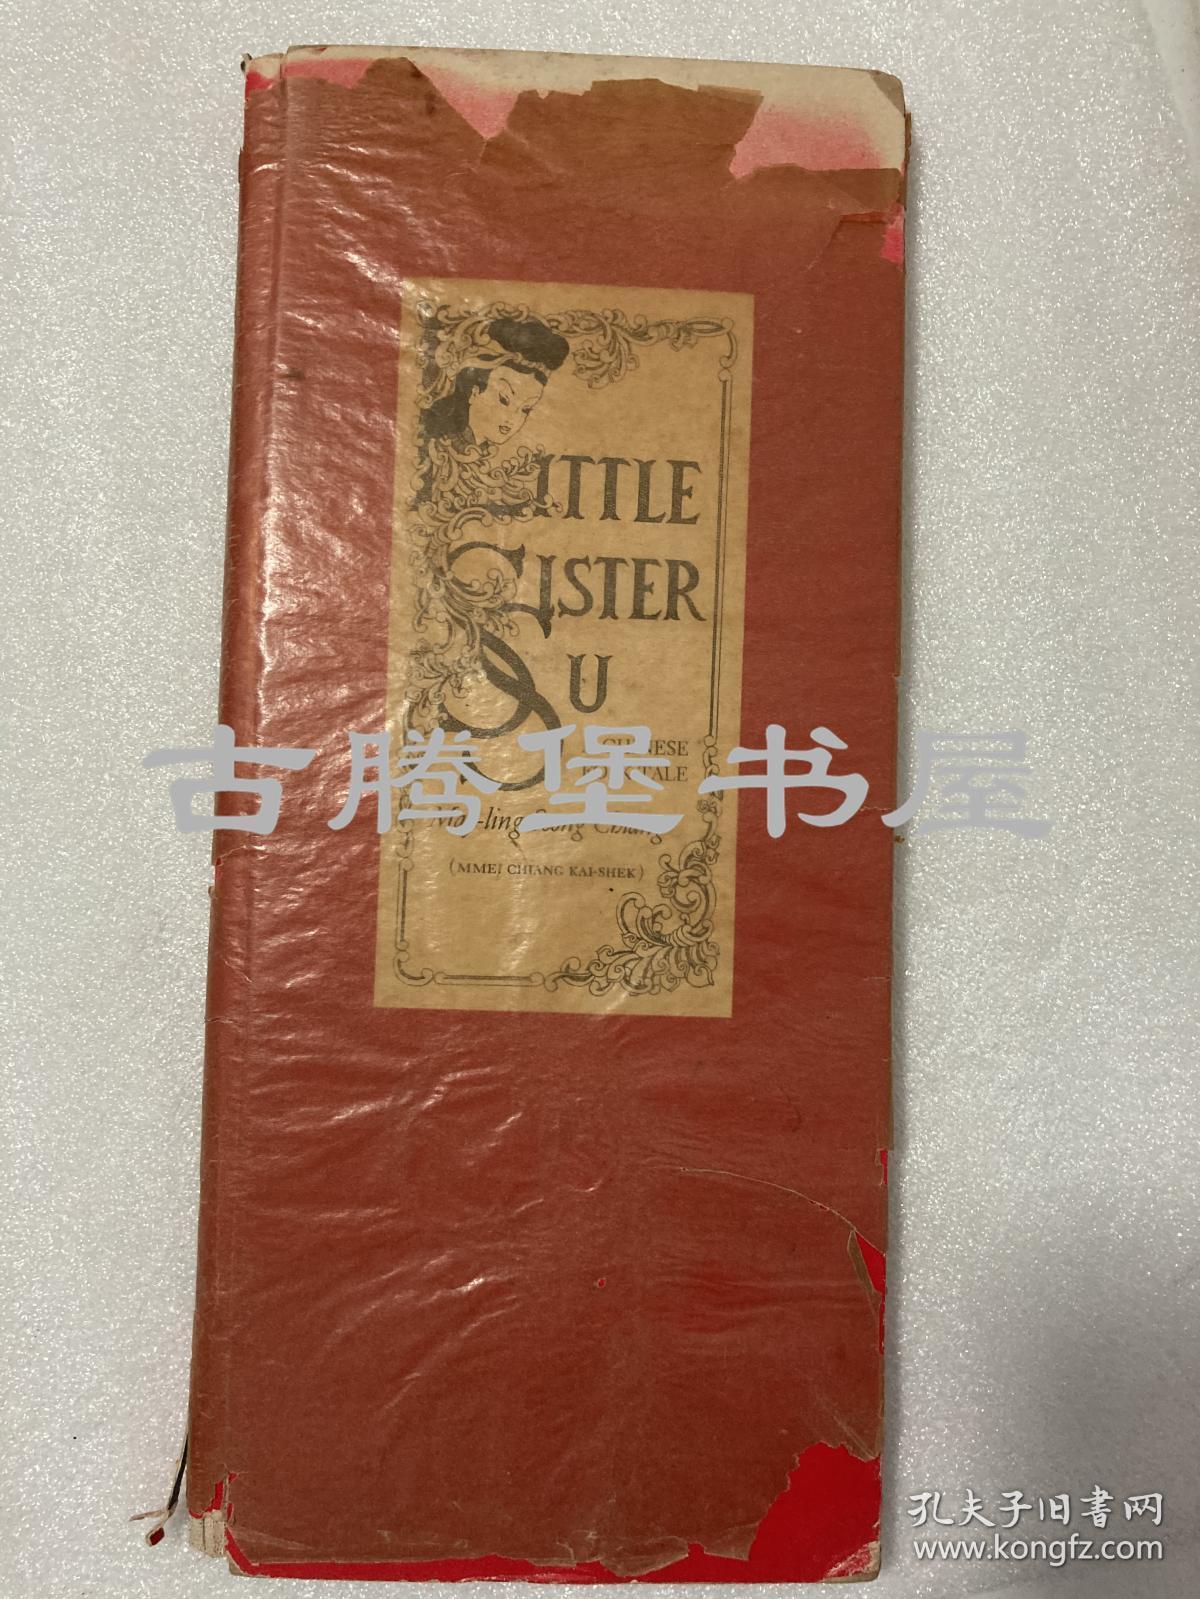 1926年英文/【大开插图本】！宋美龄著/多幅木刻版画插图！Little Sister Su ， Chiang, May-Ling Soong (Mme. Chiang Kai-Shek) /